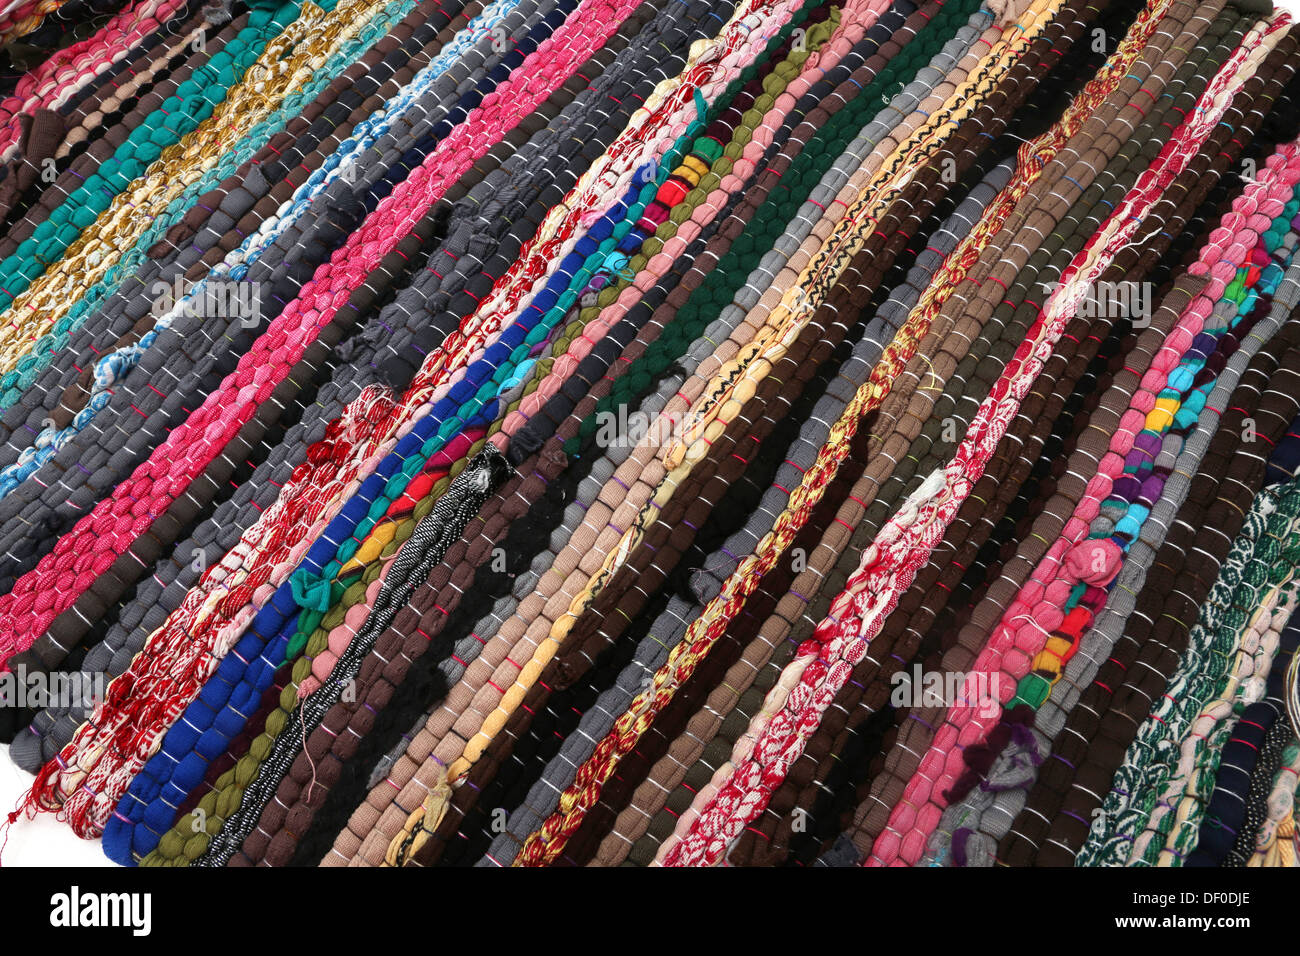 Farbenfrohe Badezimmer Matte aus recyceltem Material gefertigt Stockfoto